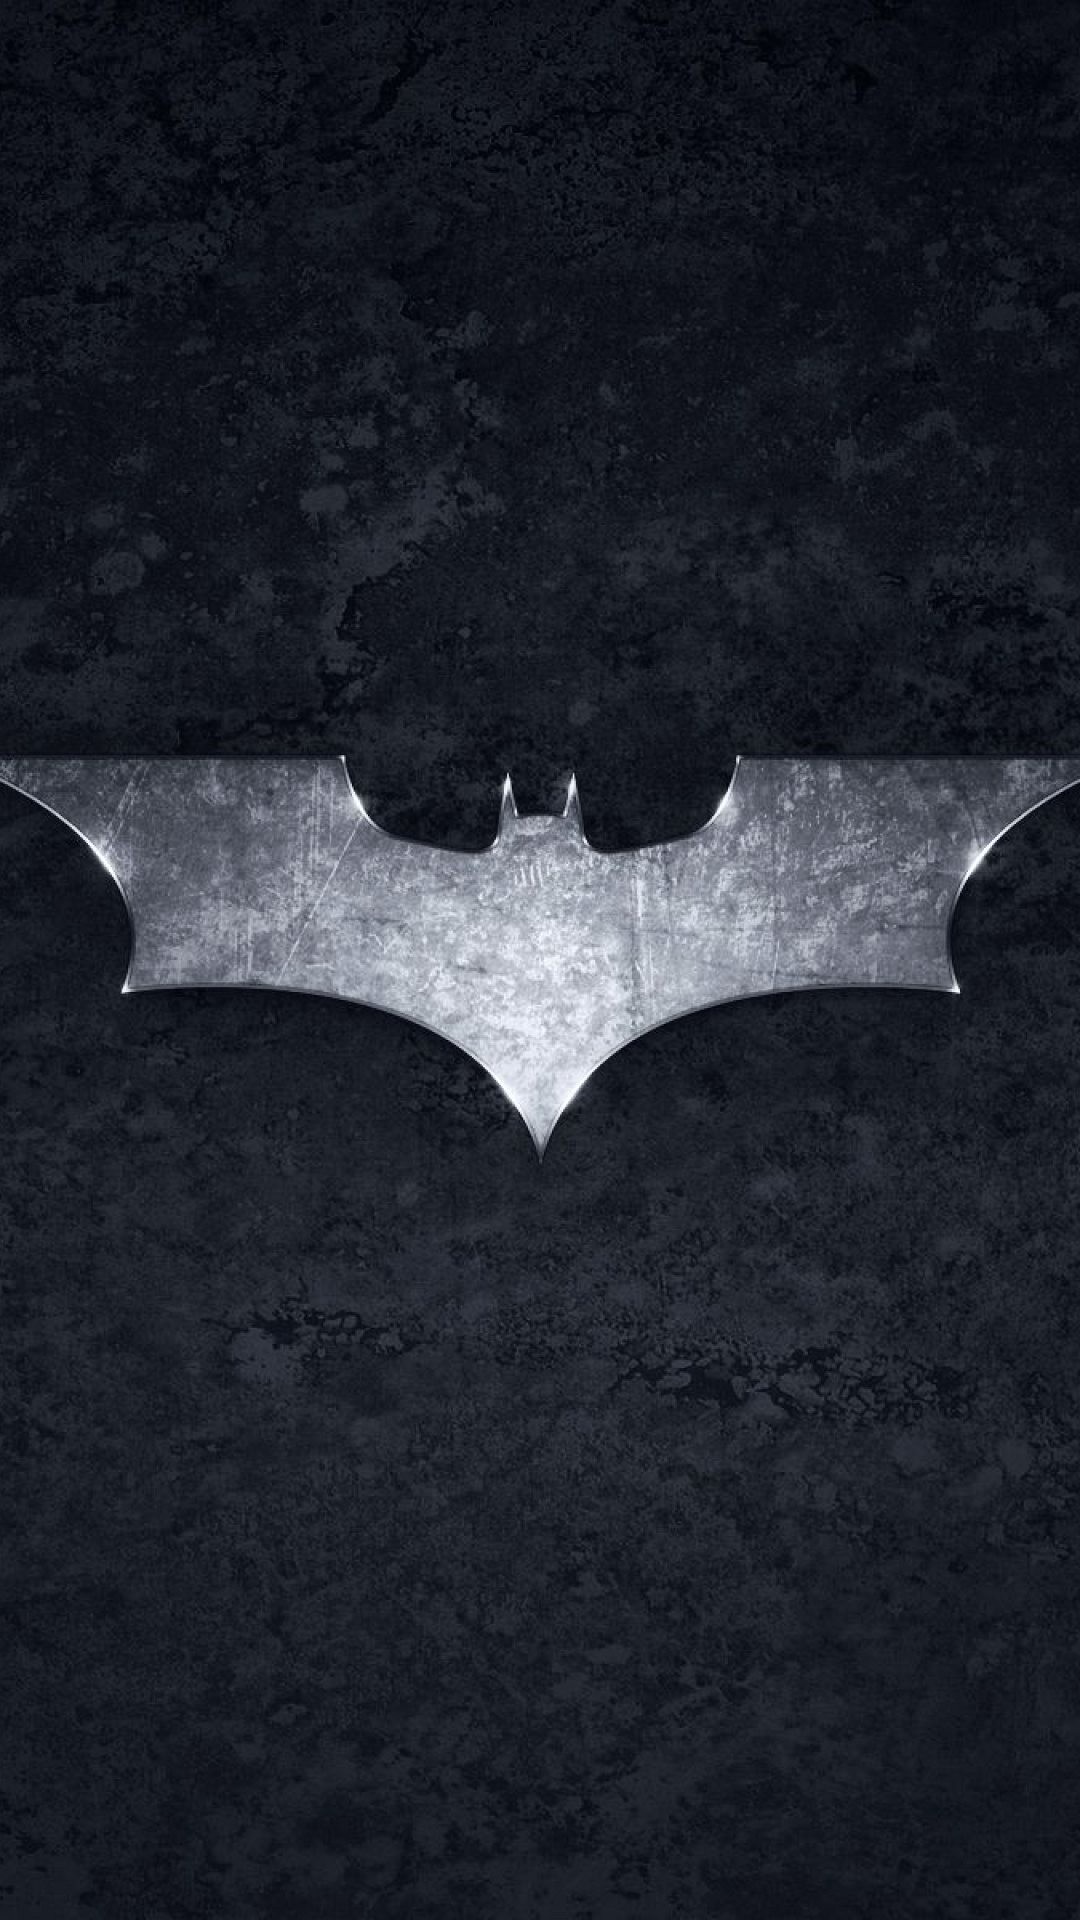 Batman Phone Wallpaper HD